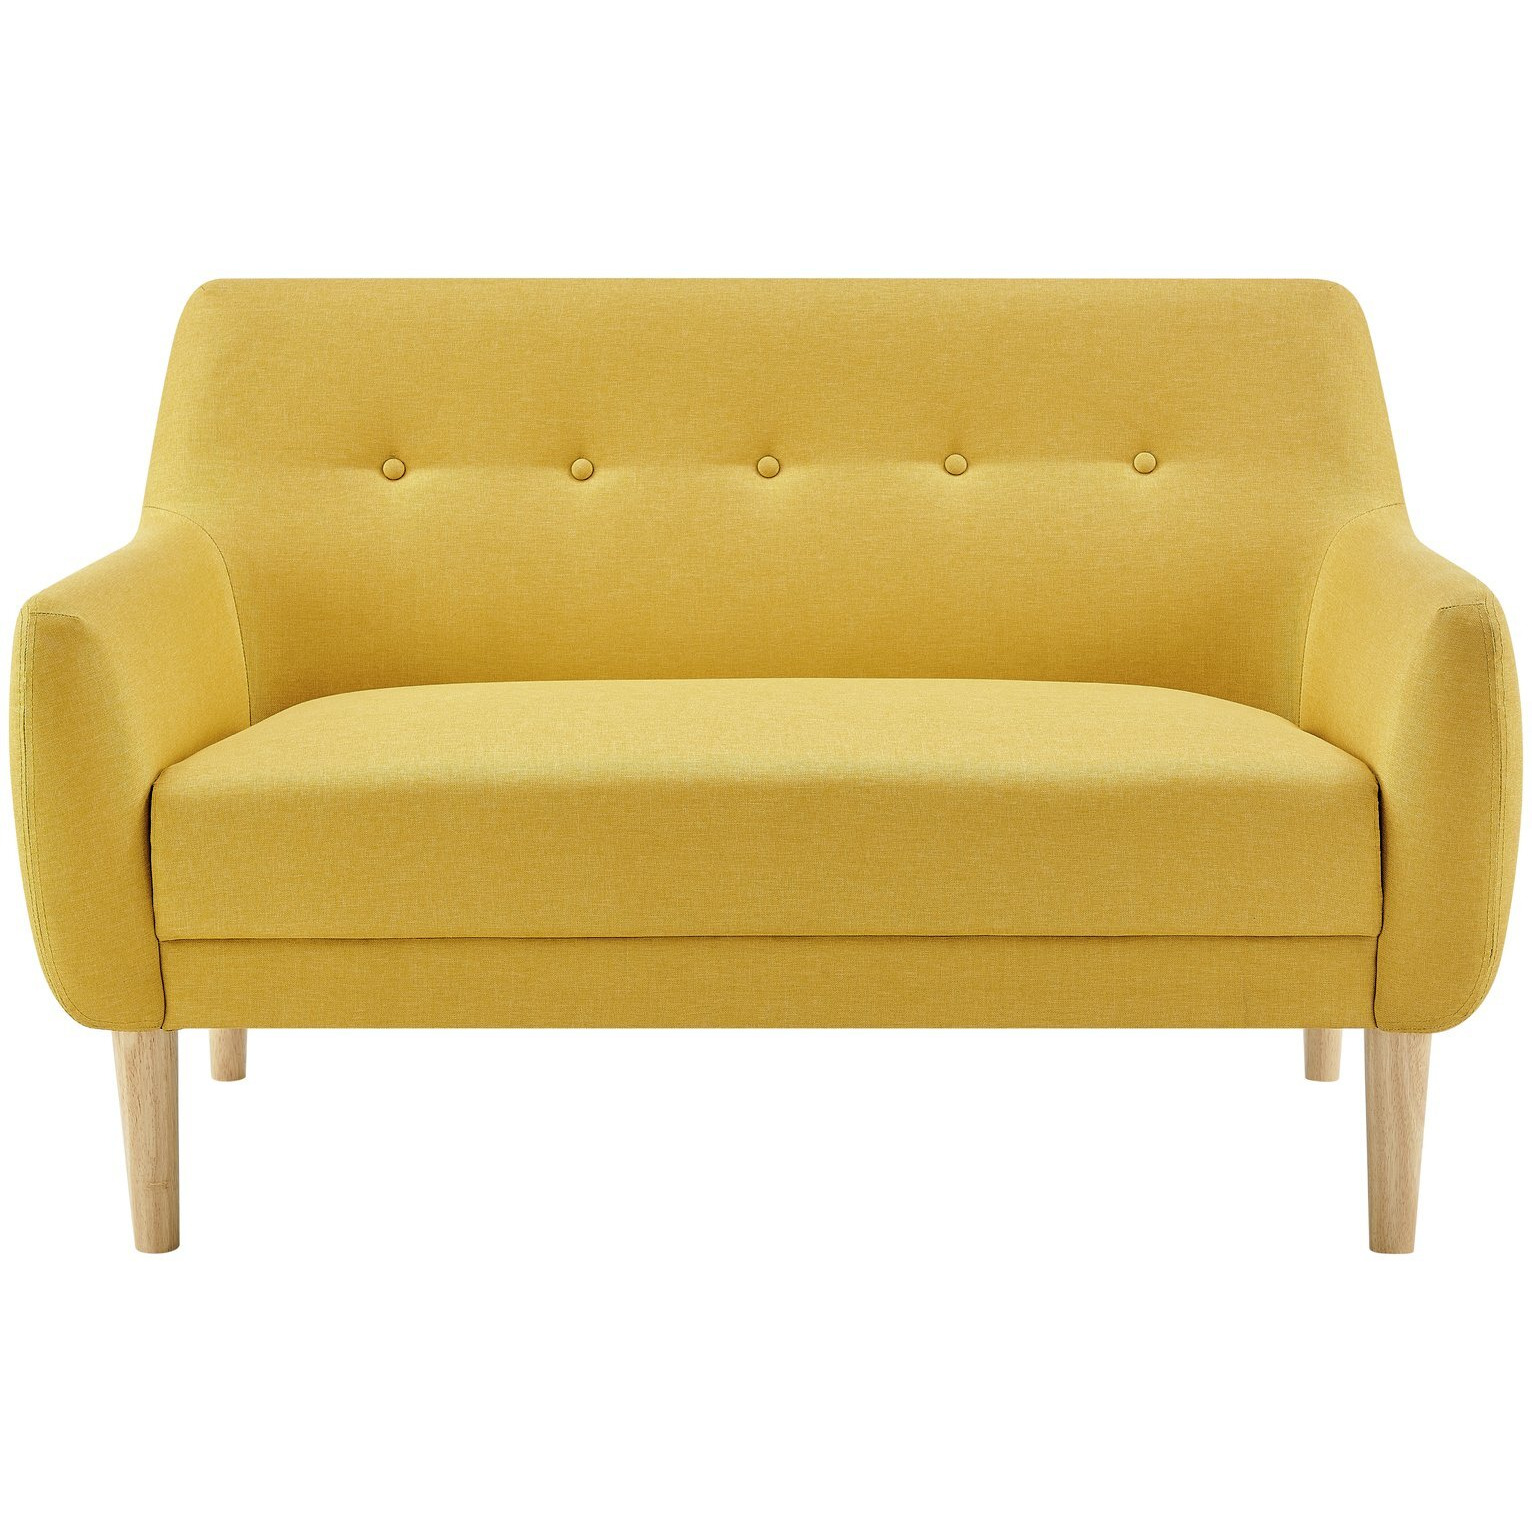 Habitat Finney Fabric 2 Seater Sofa - Mustard - image 1